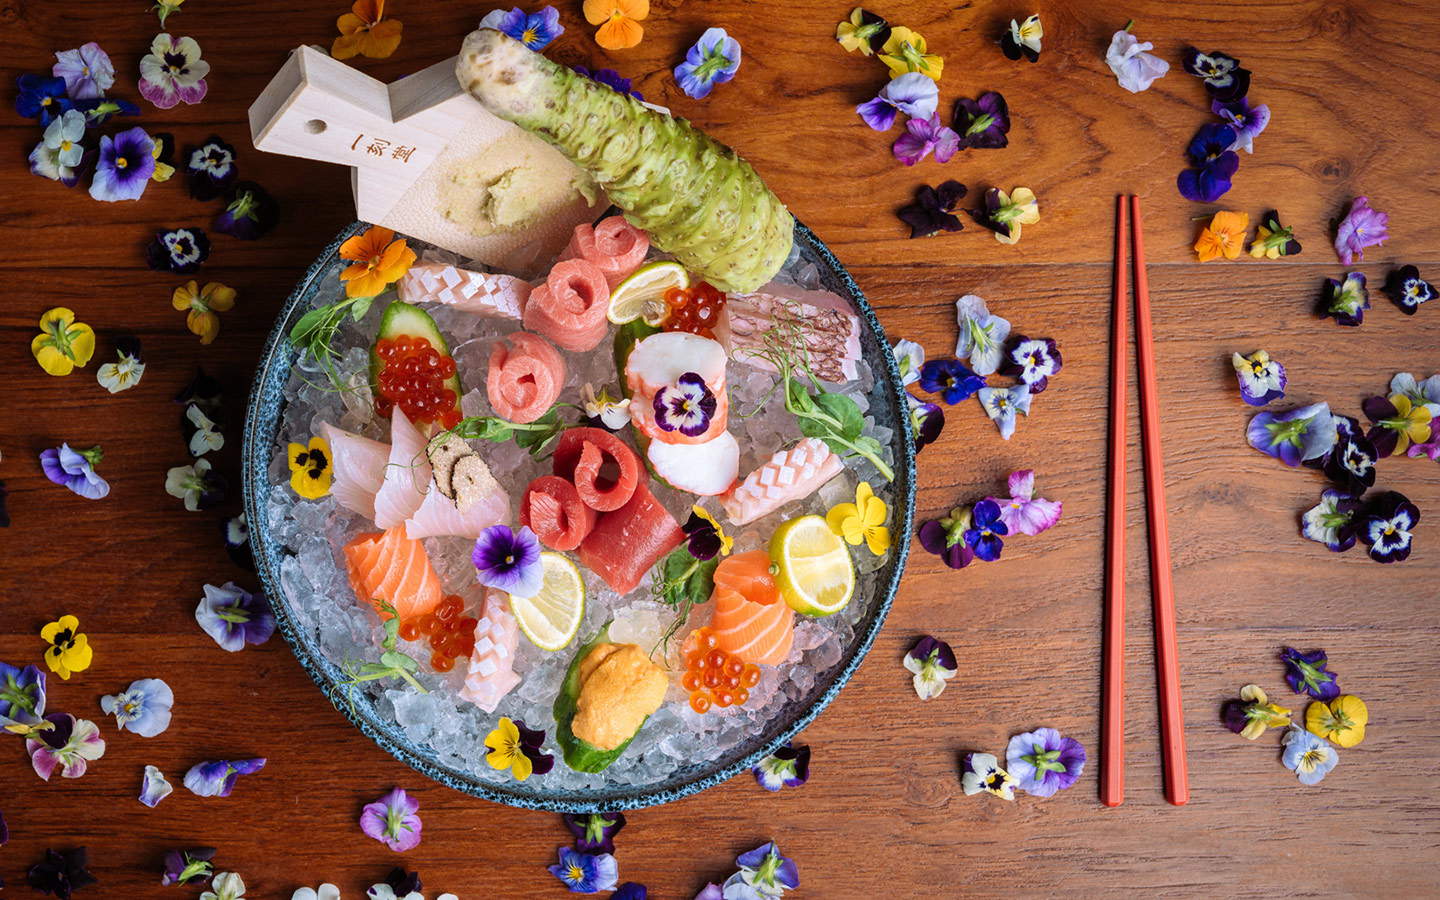 Komodo's nigiri special, decorated with colorful pansies